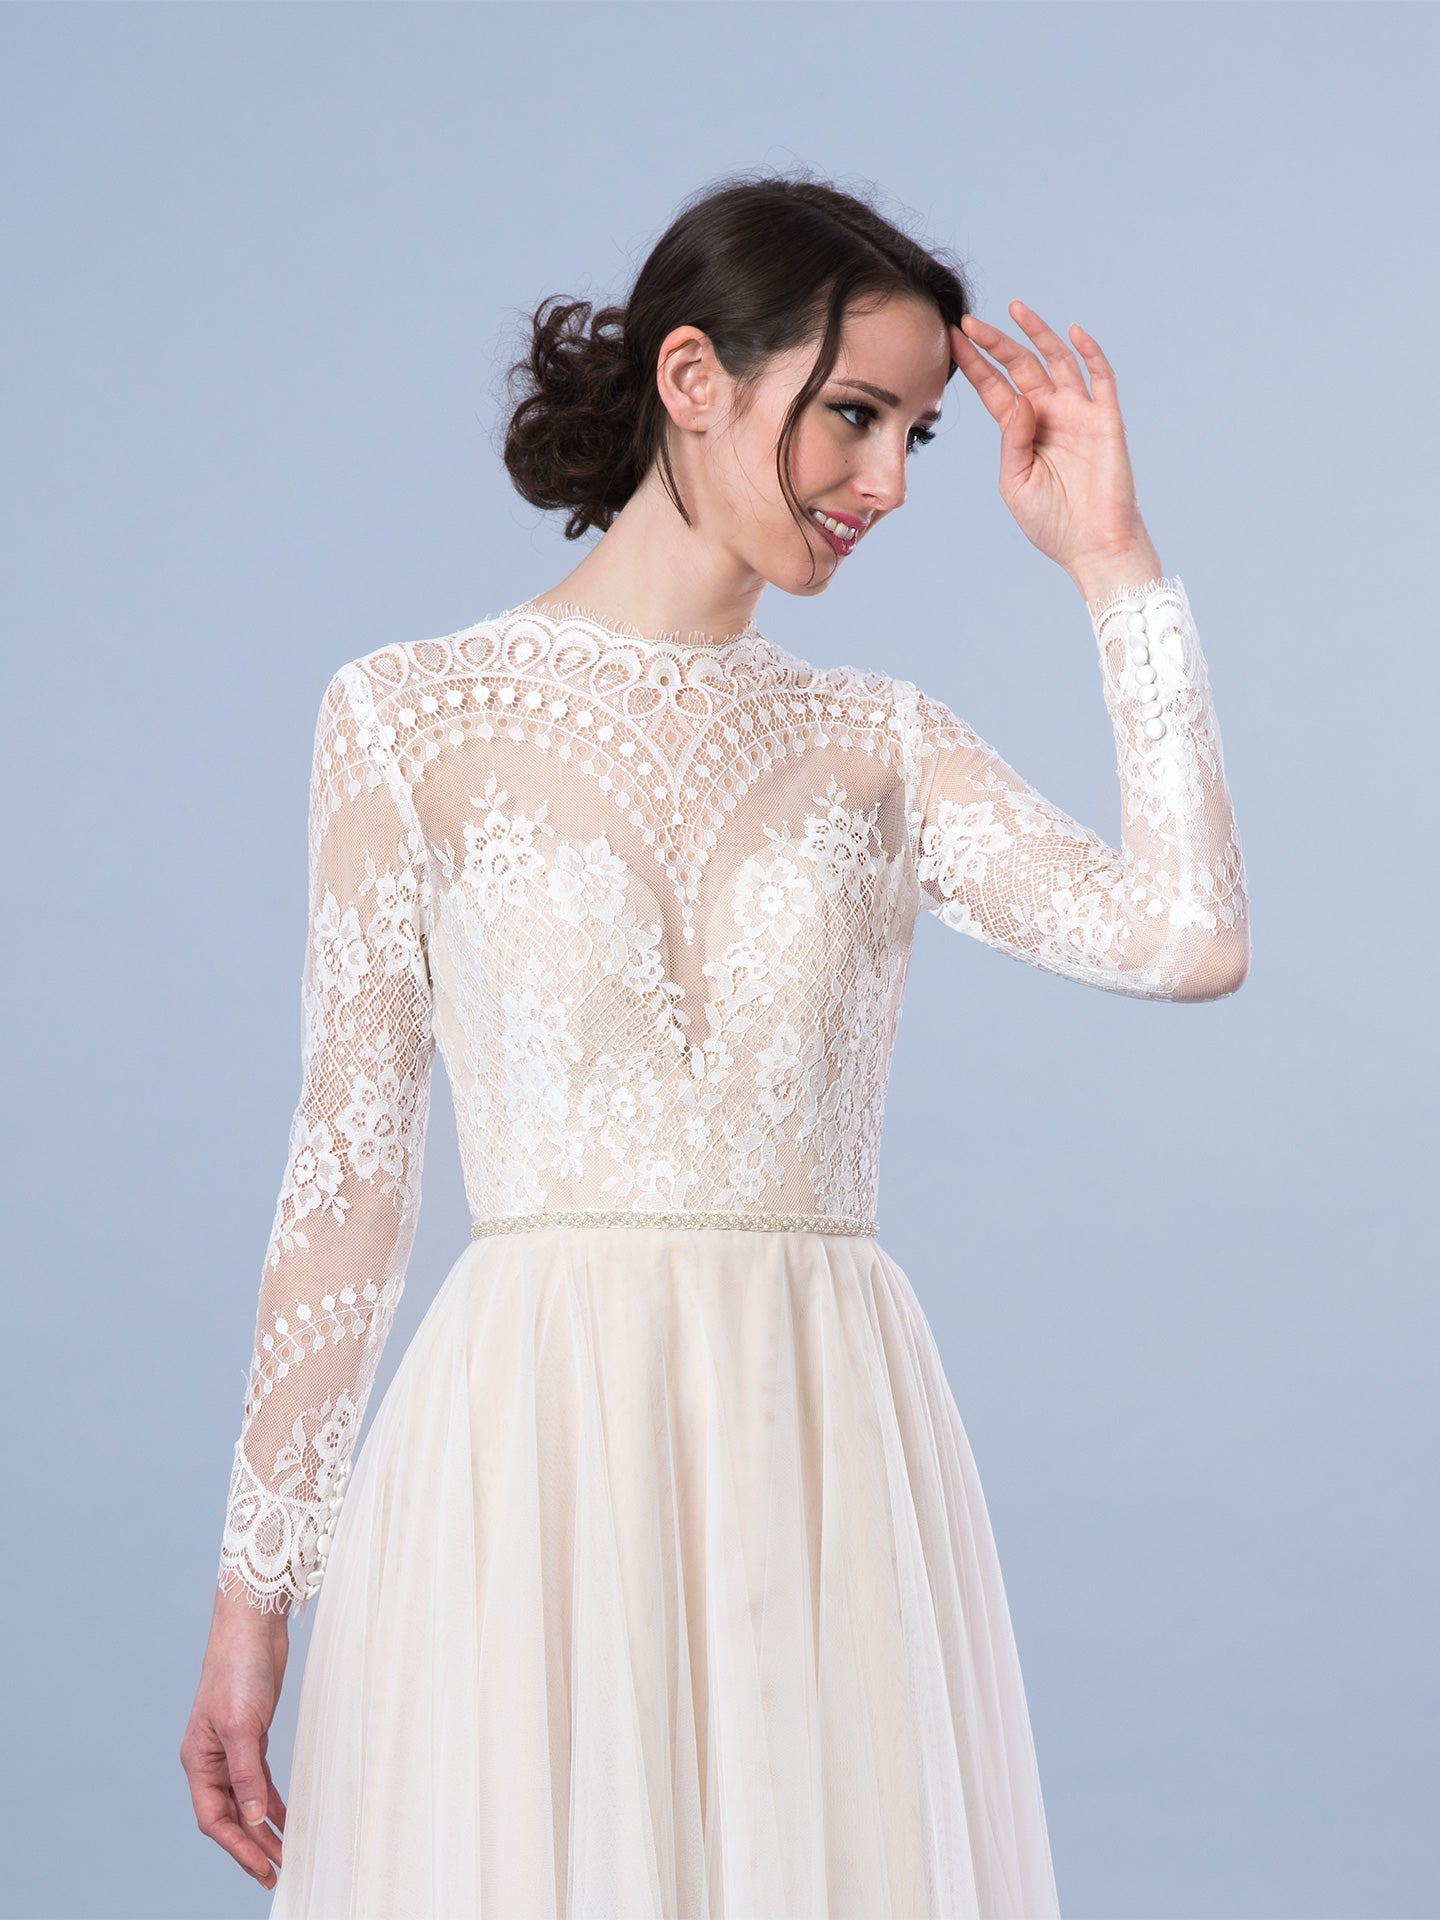 Long sleeve lace wedding dress